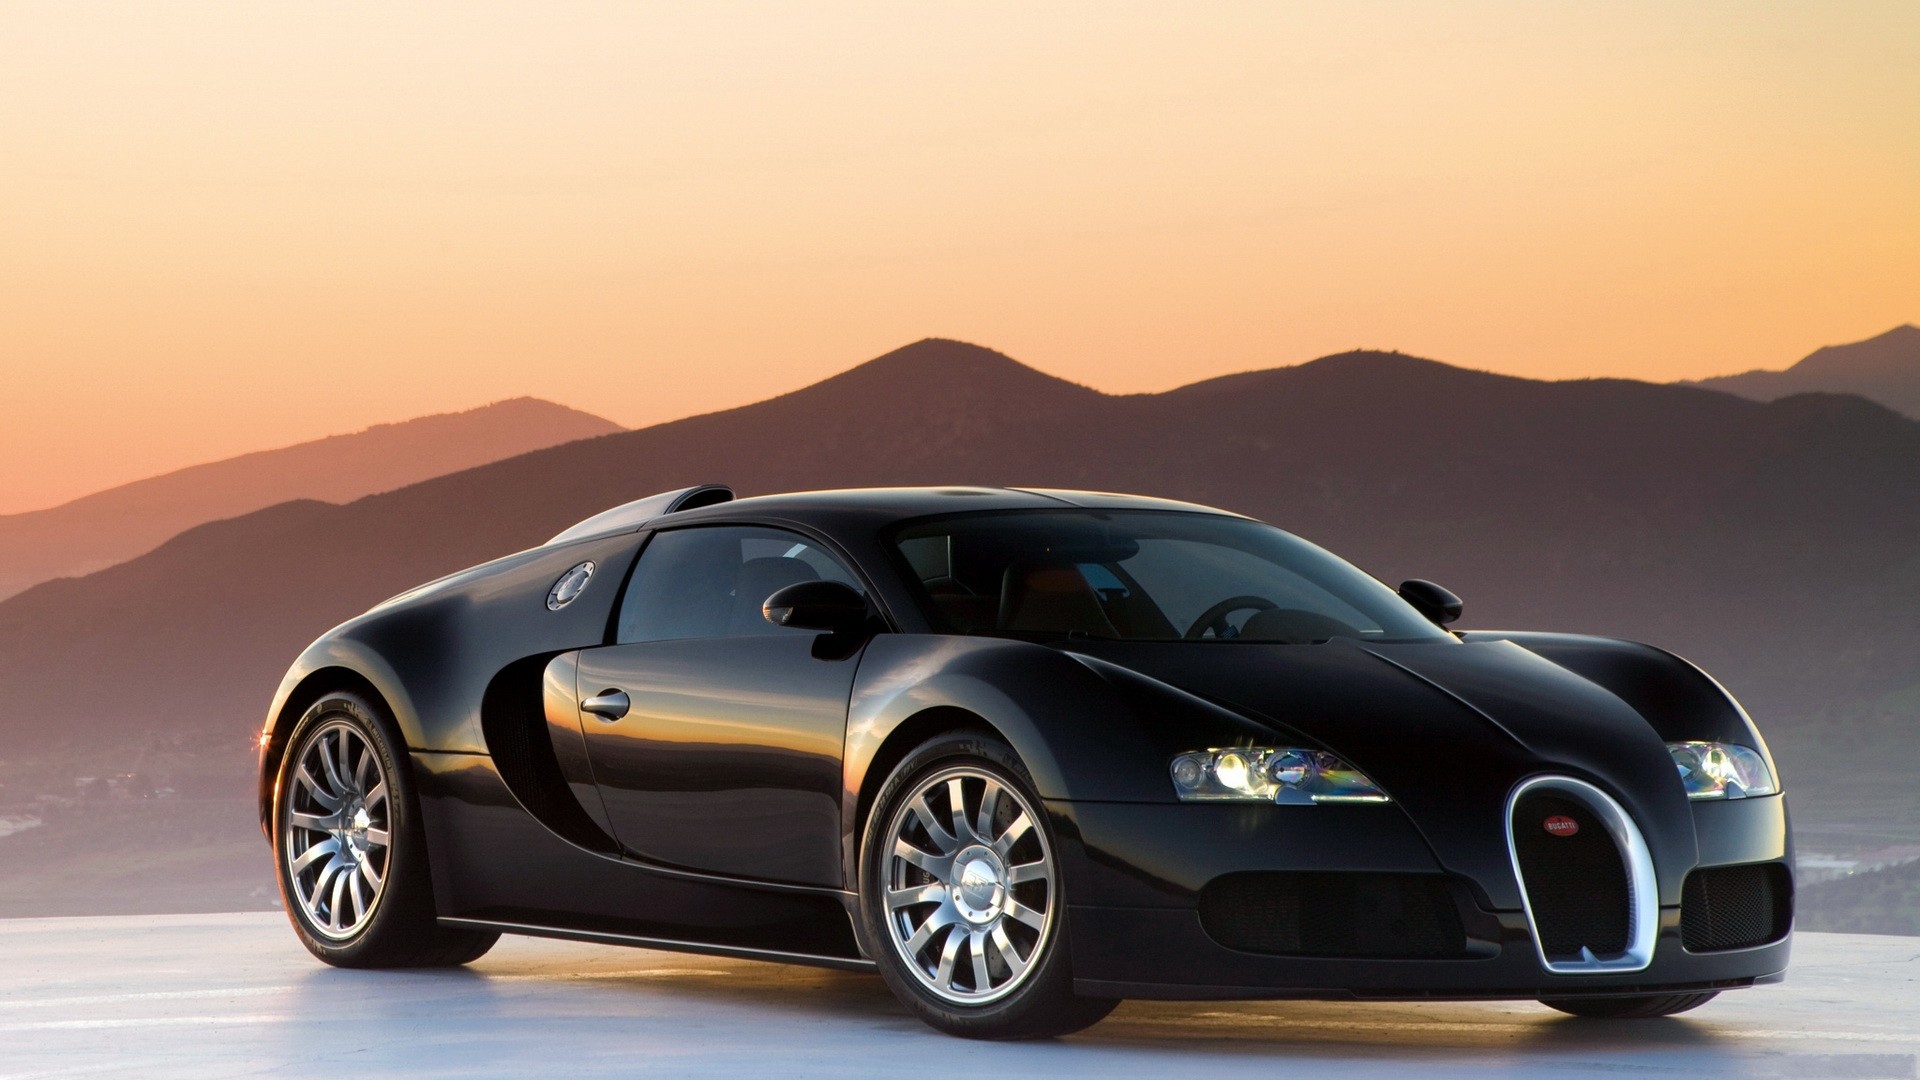 Black Bugatti Veyron Image Wallpaper Pc